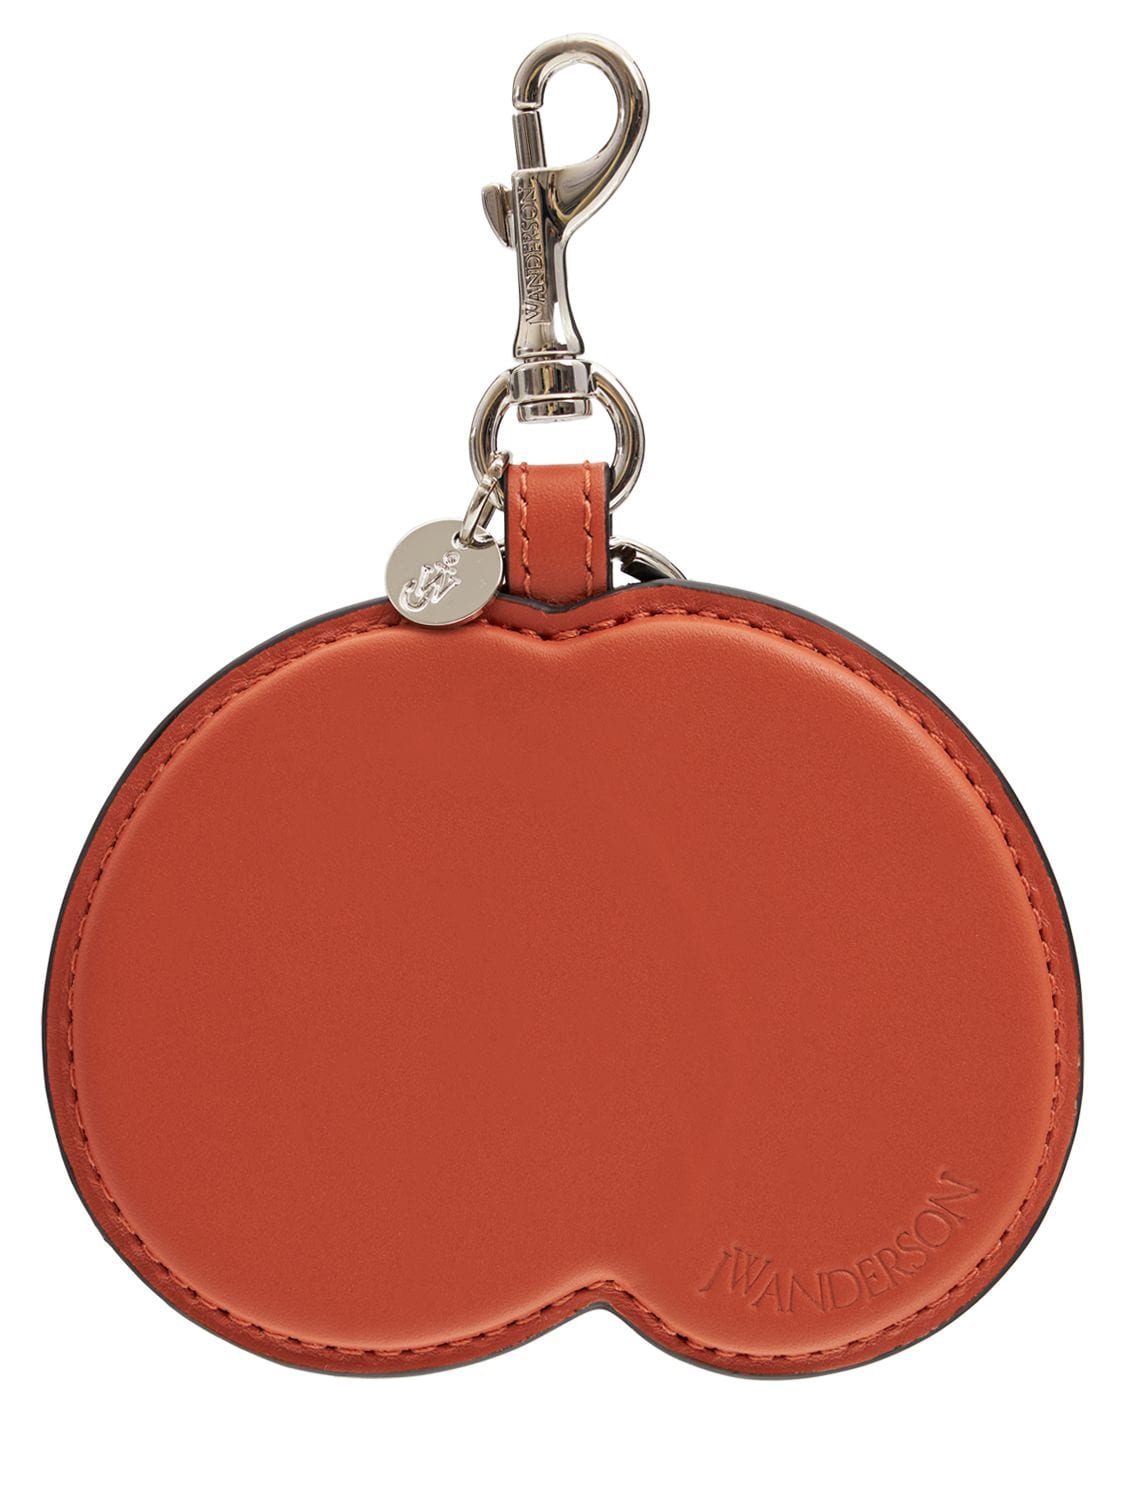 Leather Peach Key Ring